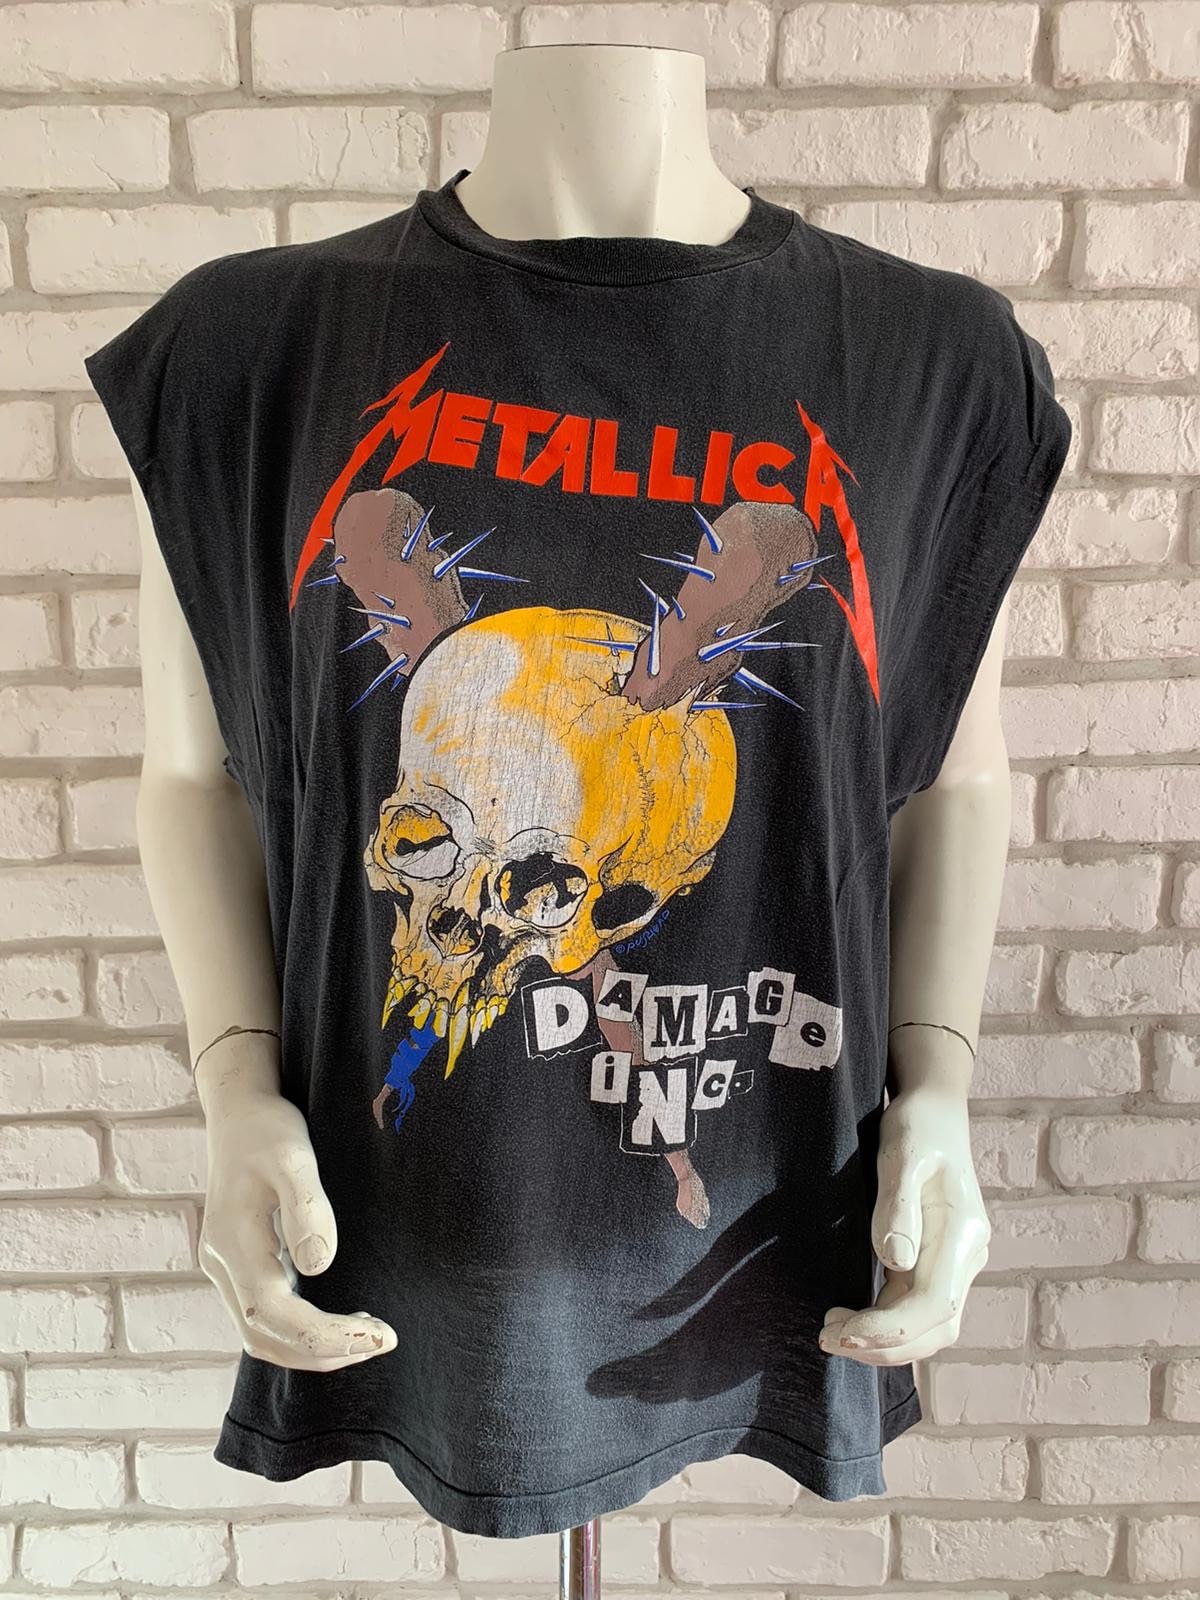 L) Vintage band metallica 1988 damage inc t shirt, Men's Fashion